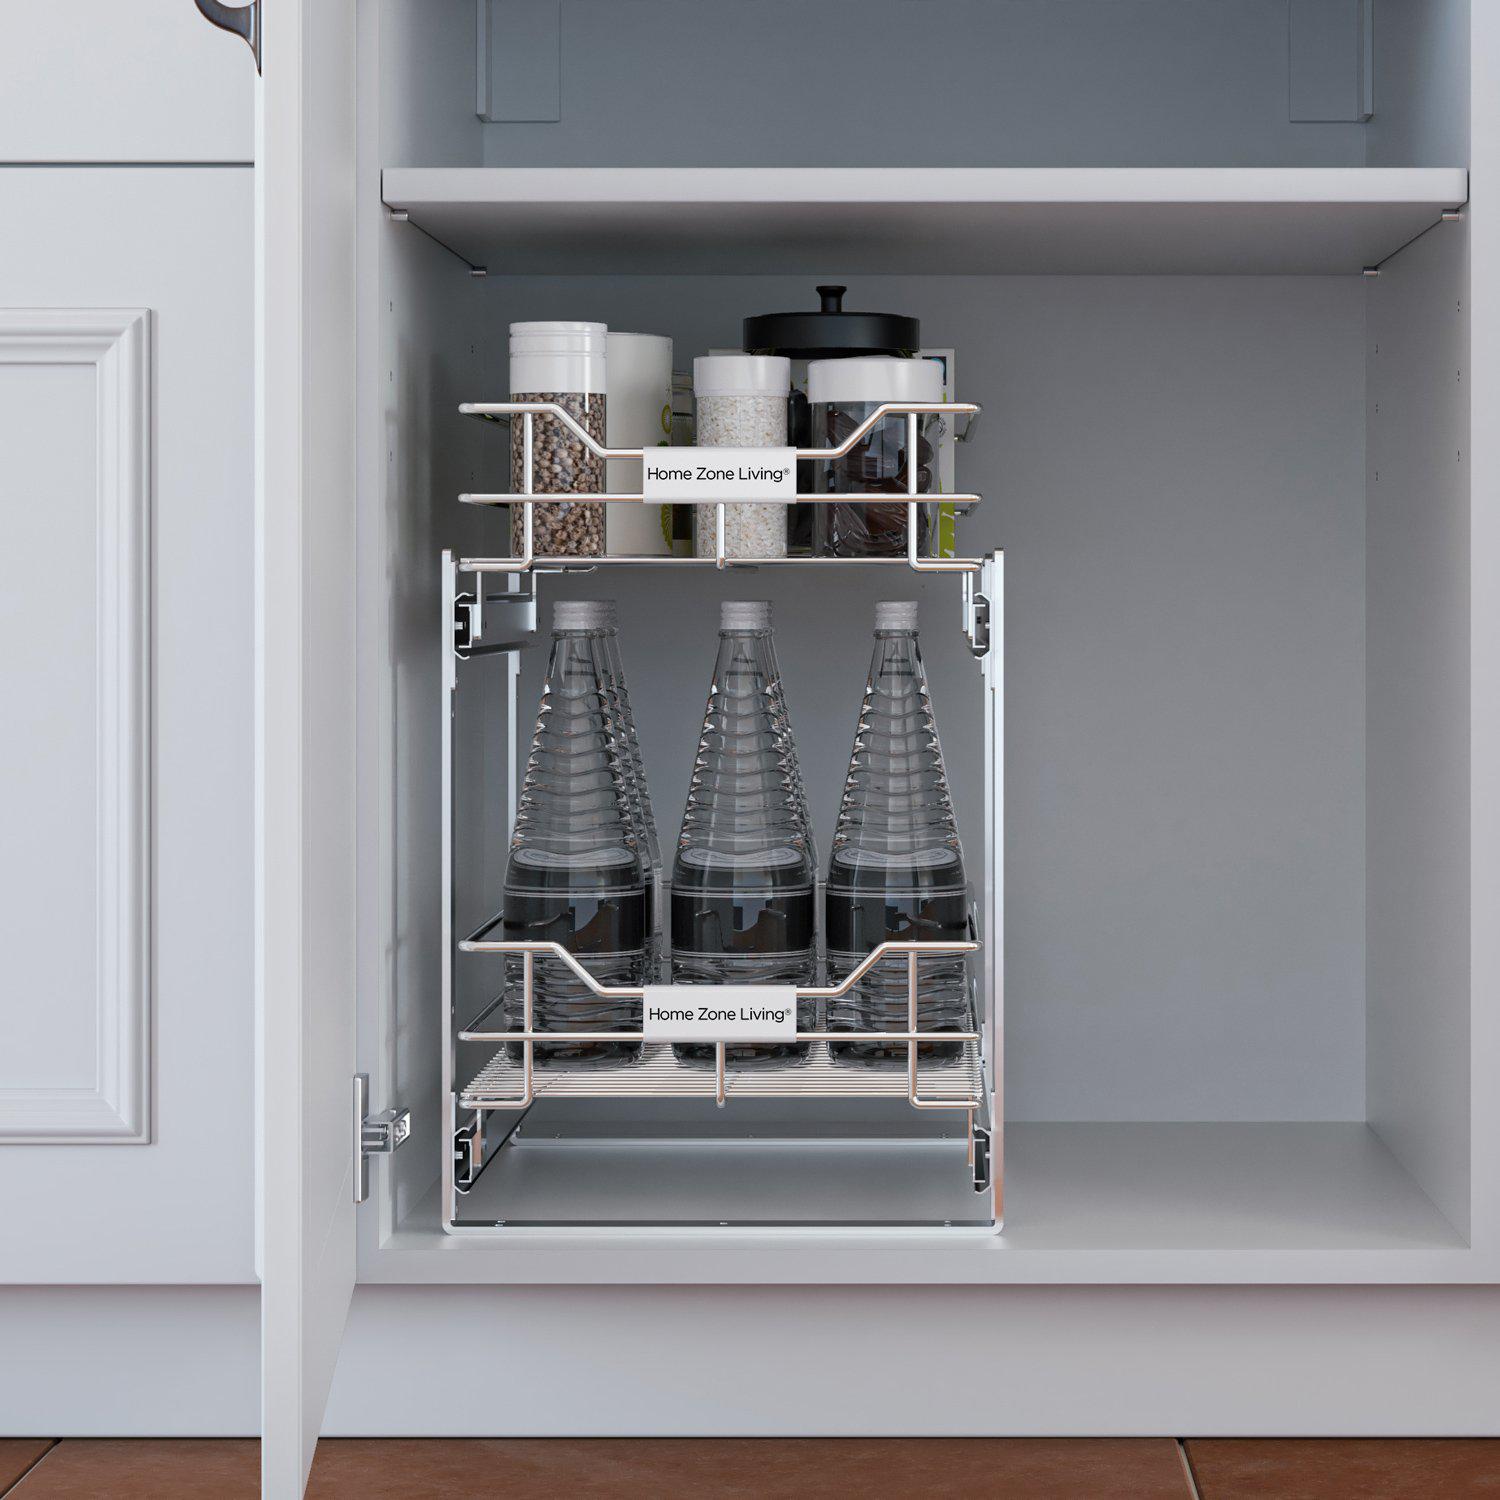 Pull Out Drawer Cabinet Organizer for Kitchen Storage - 7” W x 20